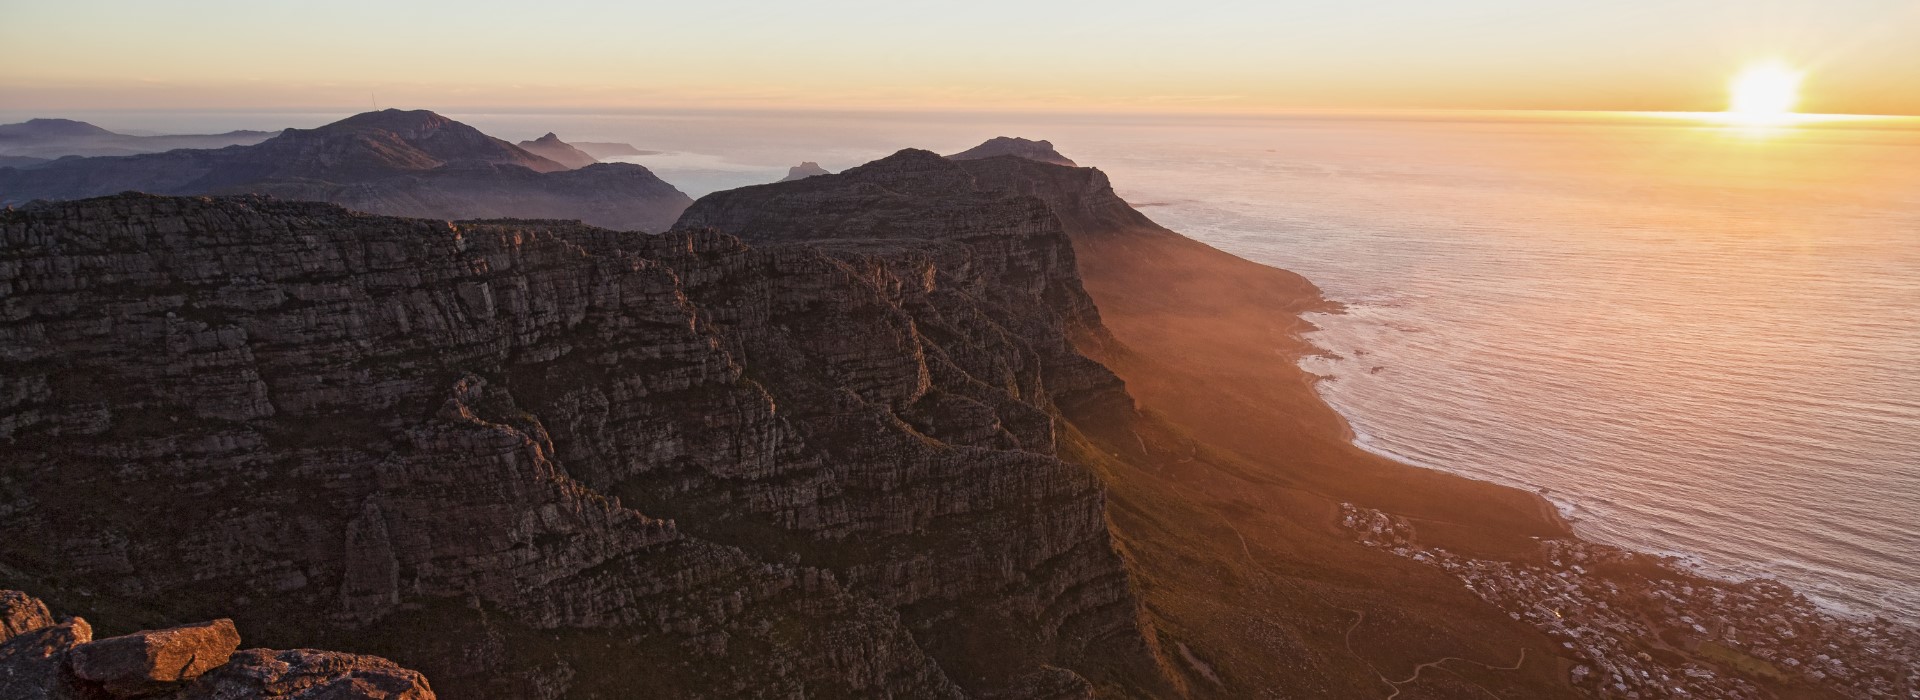 Südafrika Küste - Sonnenuntergang